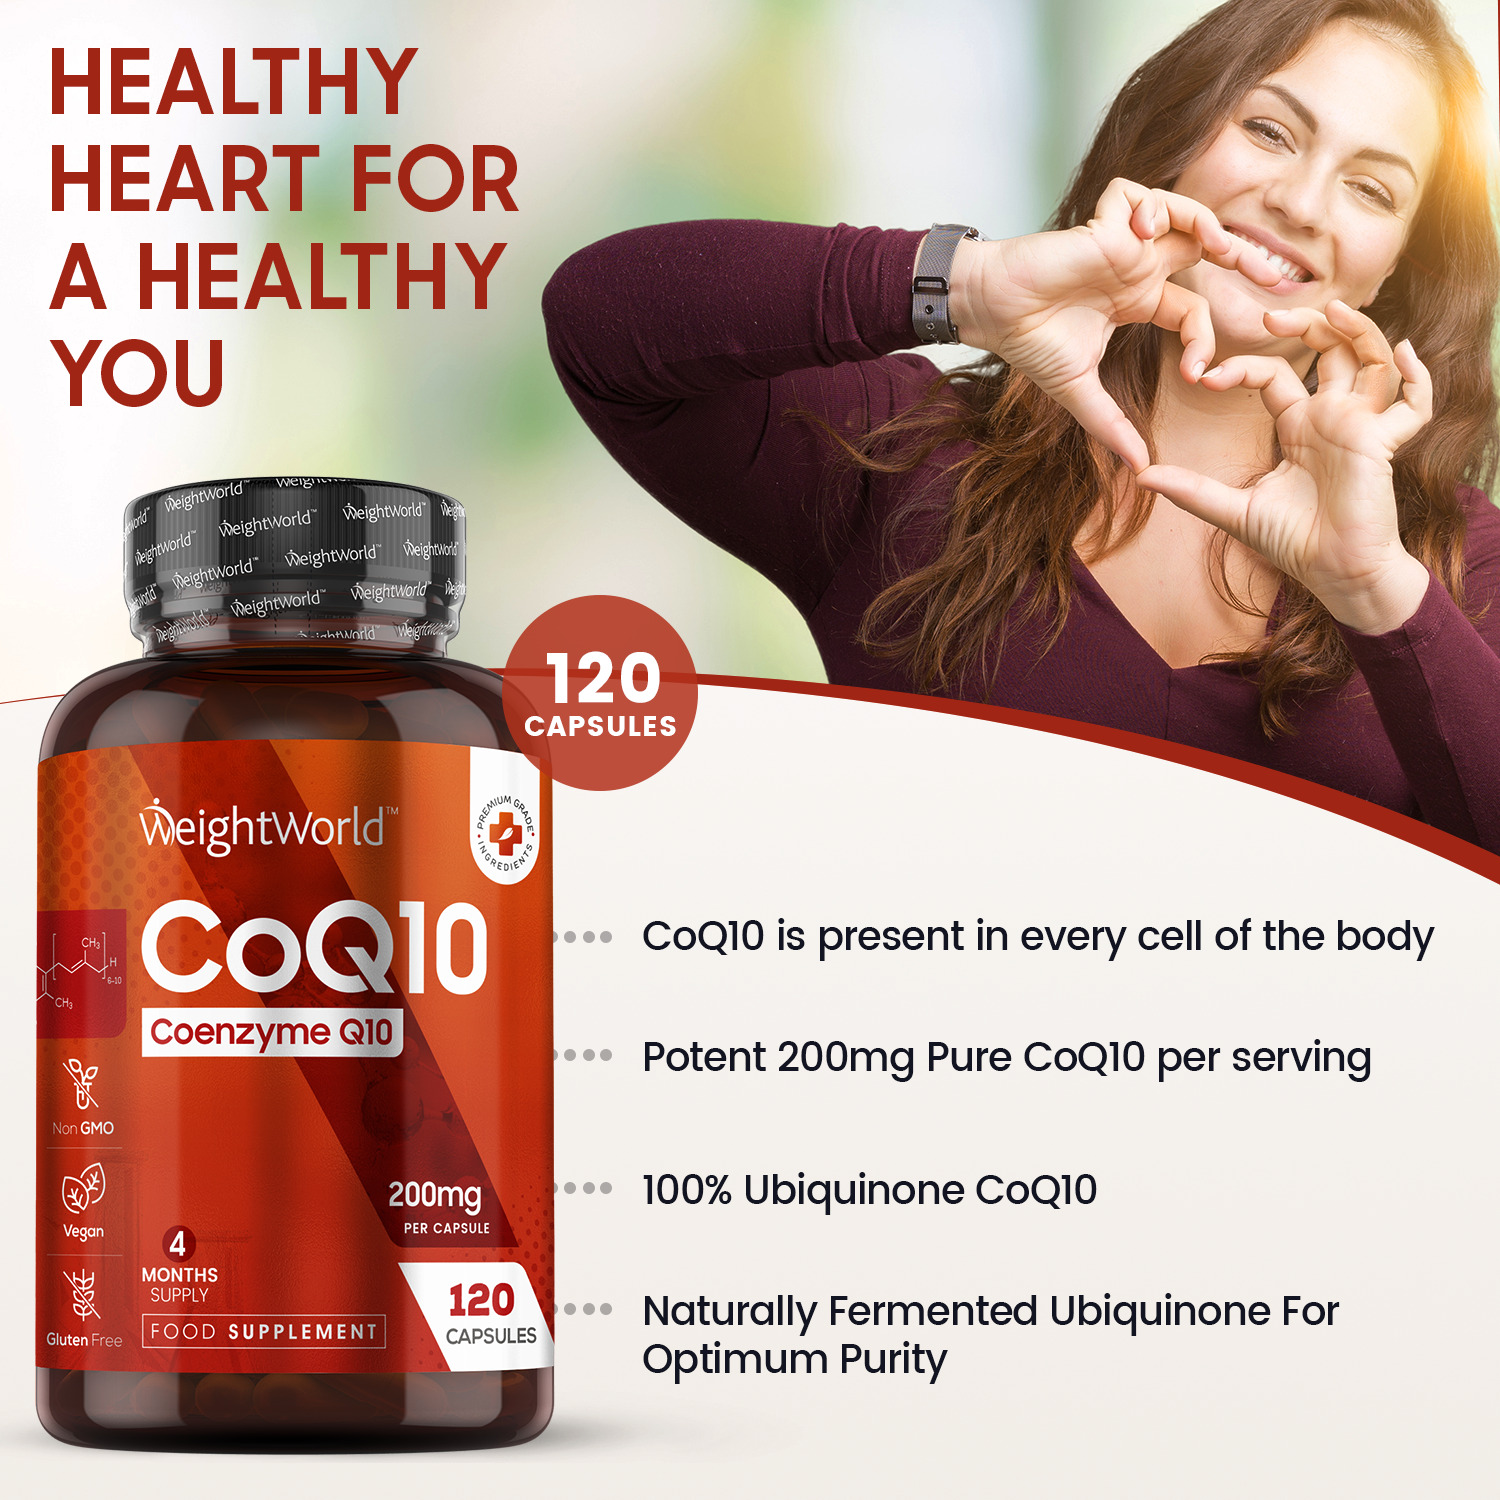 CoQ10 Capsules from EarthBiotics - Health Benefits